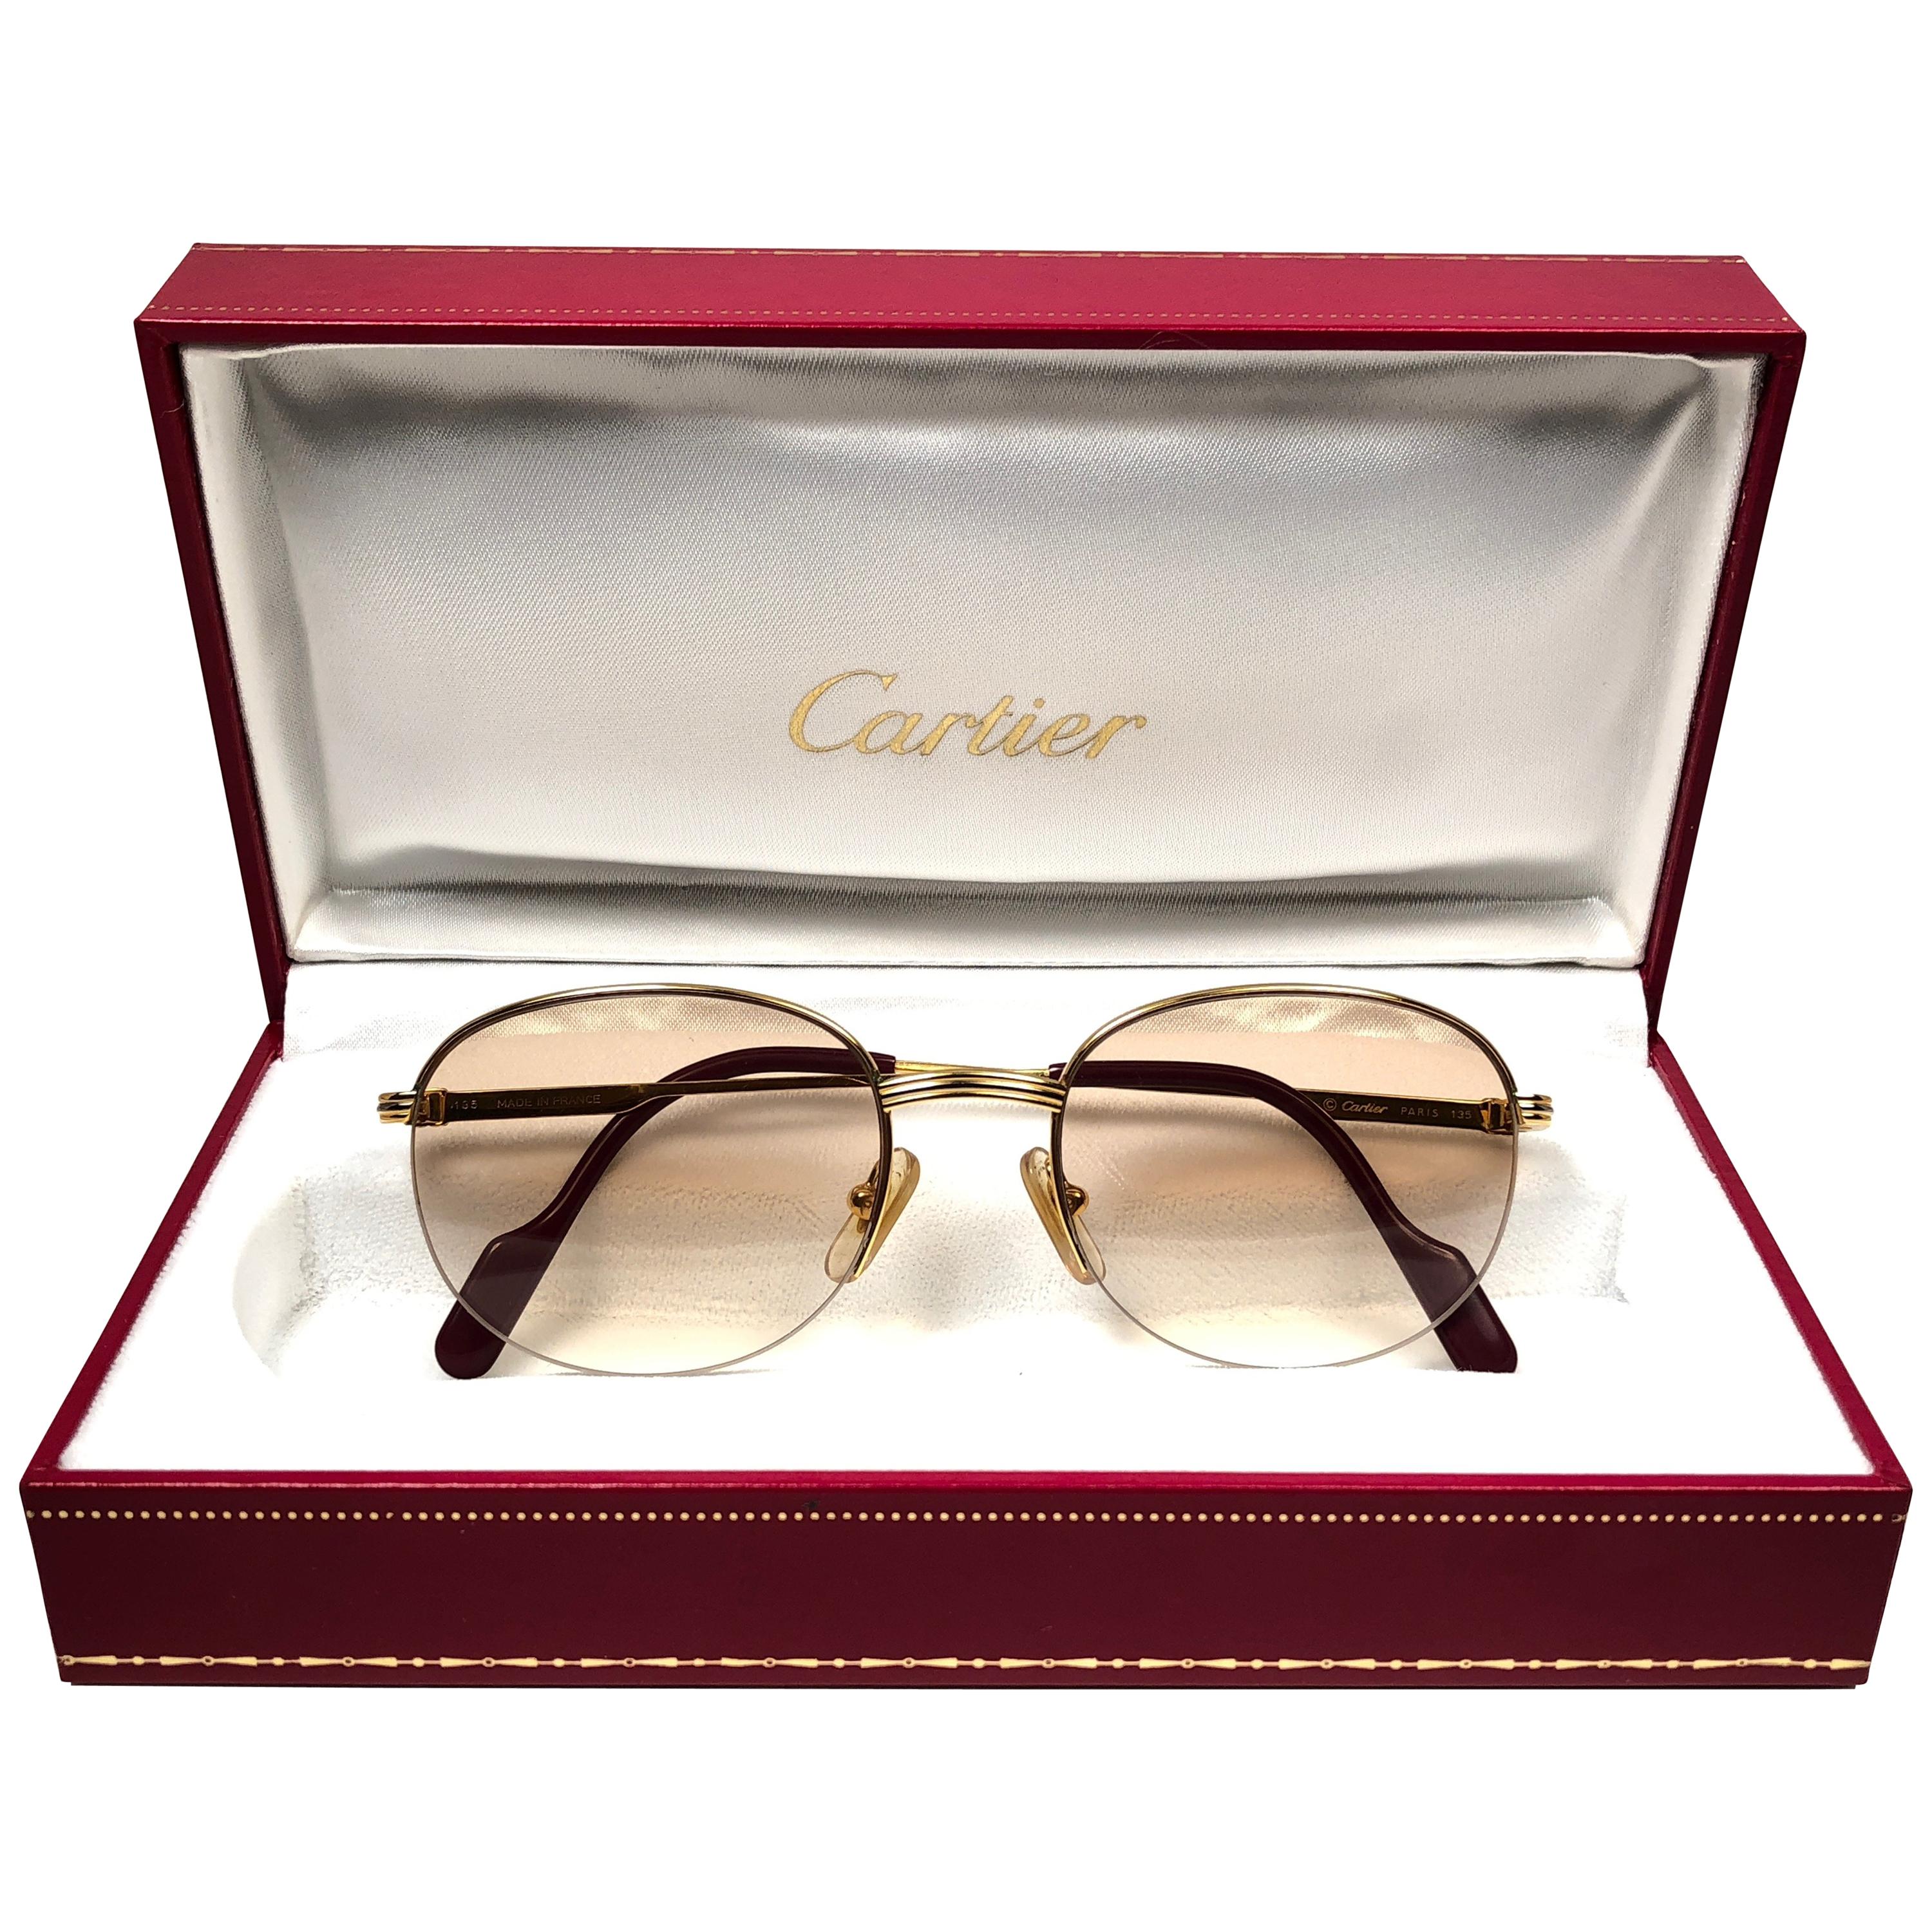 New Cartier Colisee Half Frame 49mm Sunglasses 18k Gold Sunglasses France